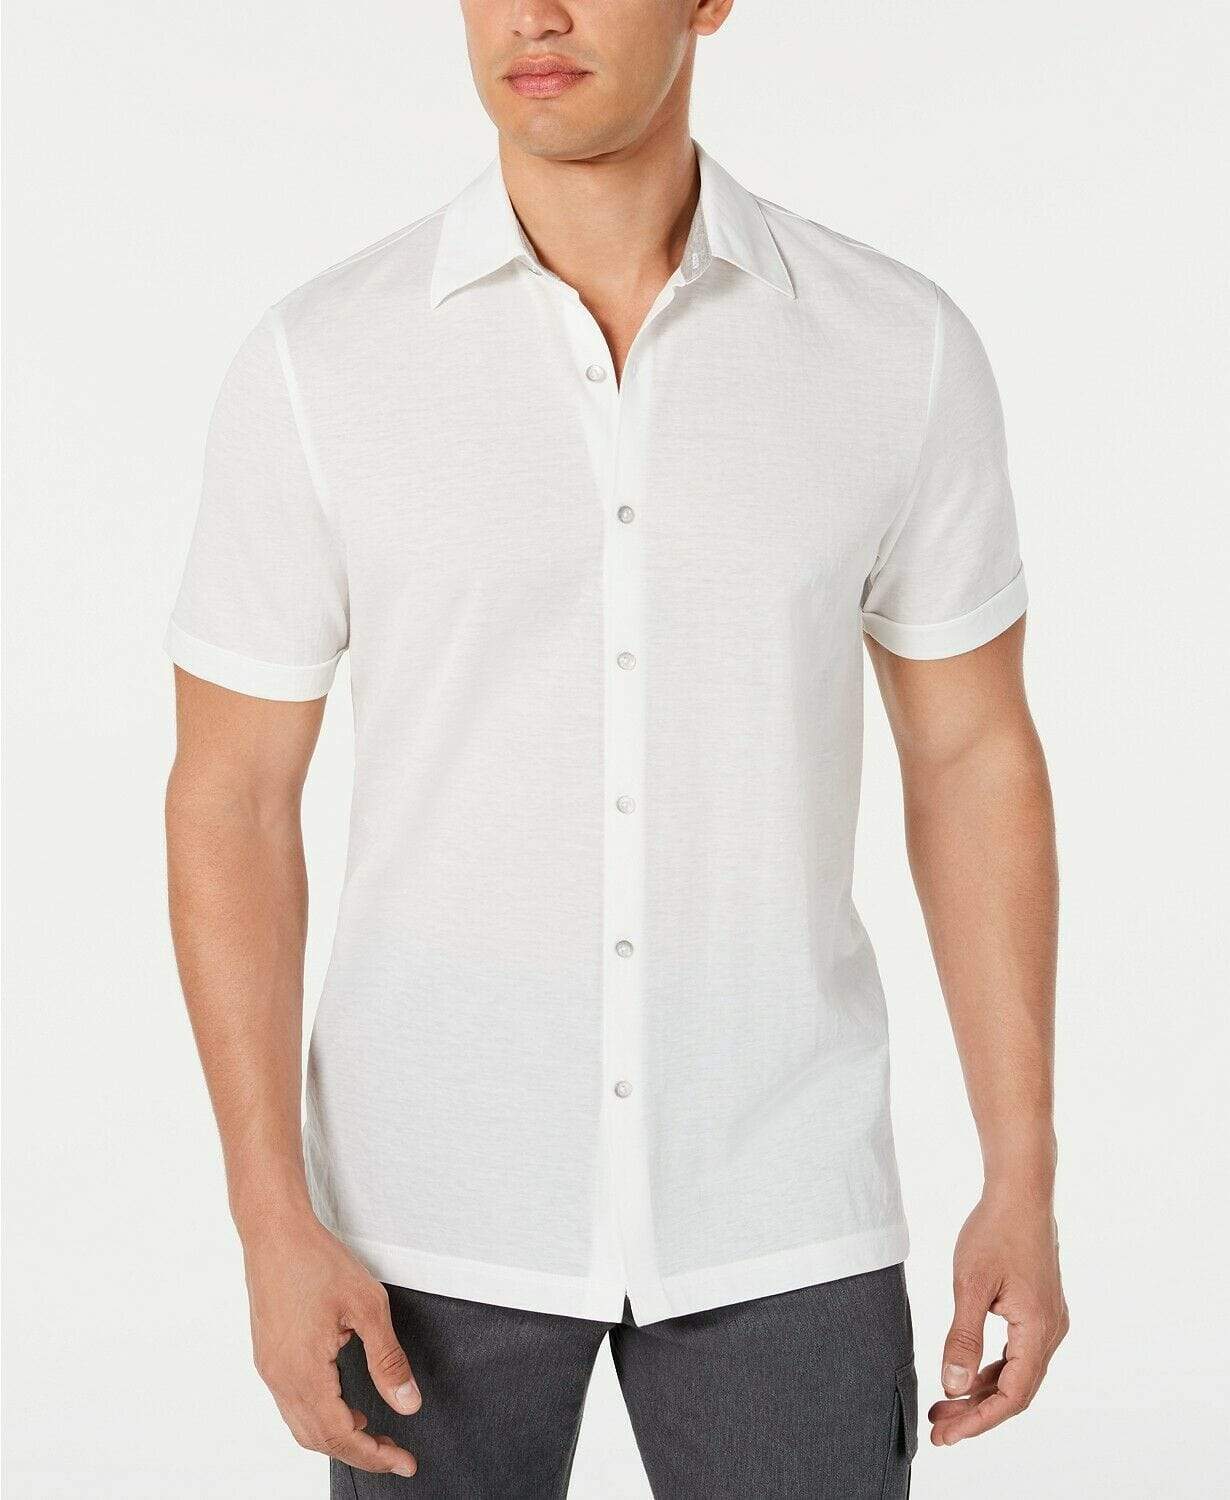 Tasso Elba Mens Tops X-Large / White Short Sleeve Shirt Linen Button Down